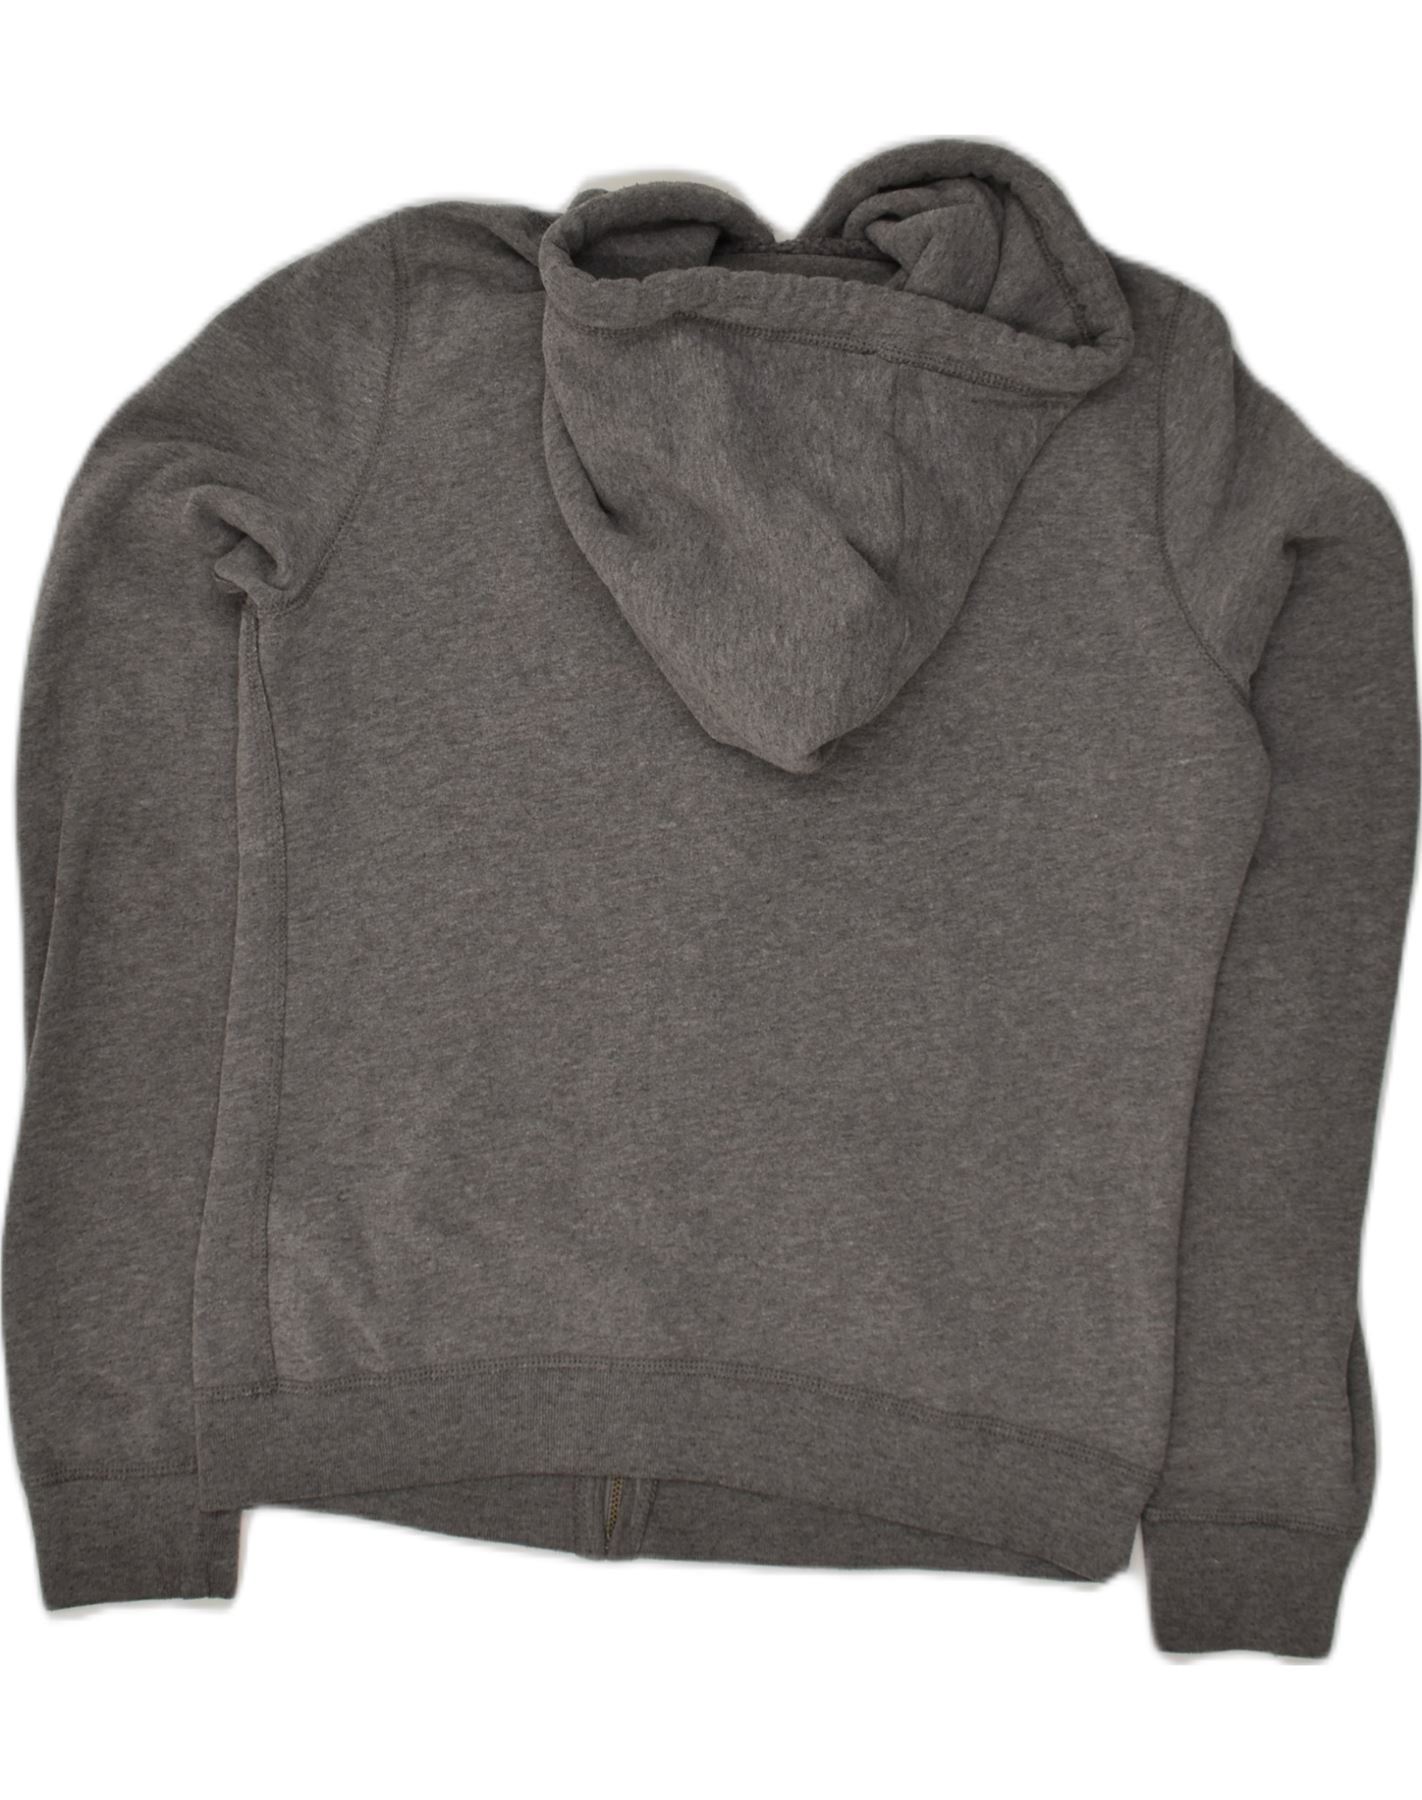 HOLLISTER Womens Graphic Zip Hoodie Sweater UK 10 Small Grey